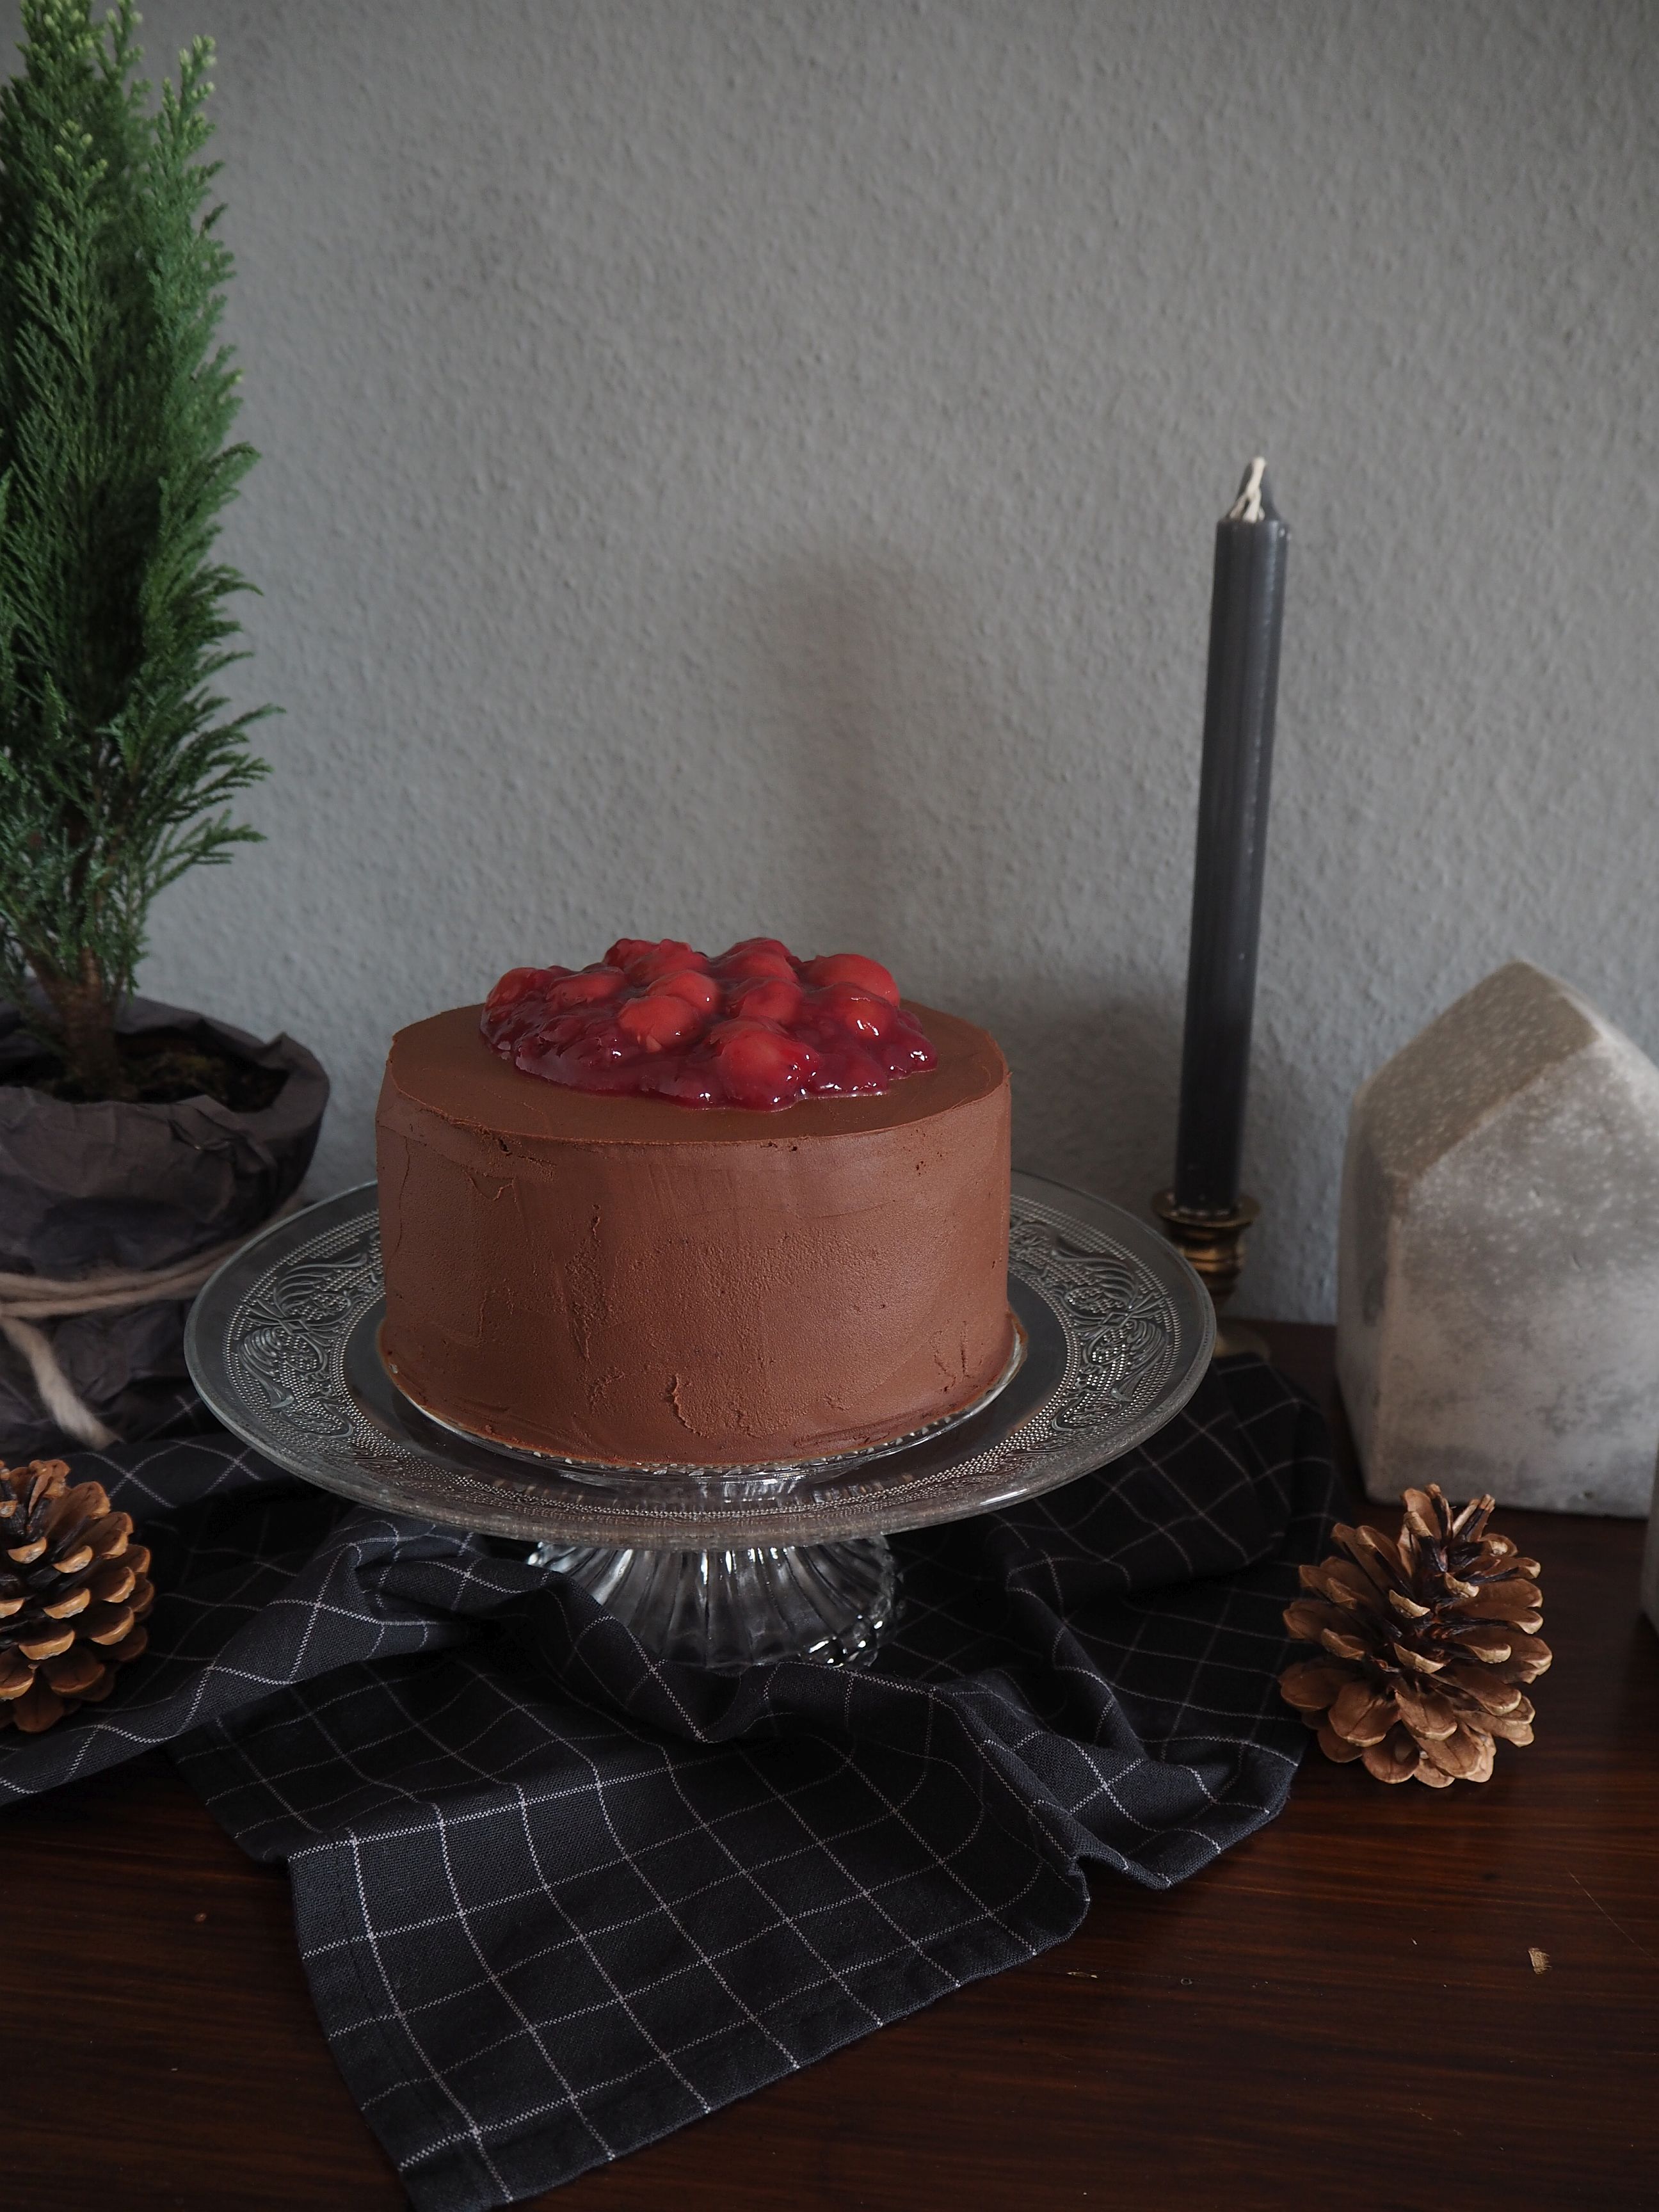 2017-12-skoen-och-kreativ-adventskalender-cookie-and-cake-love-chocolate-cherry-cake (2)